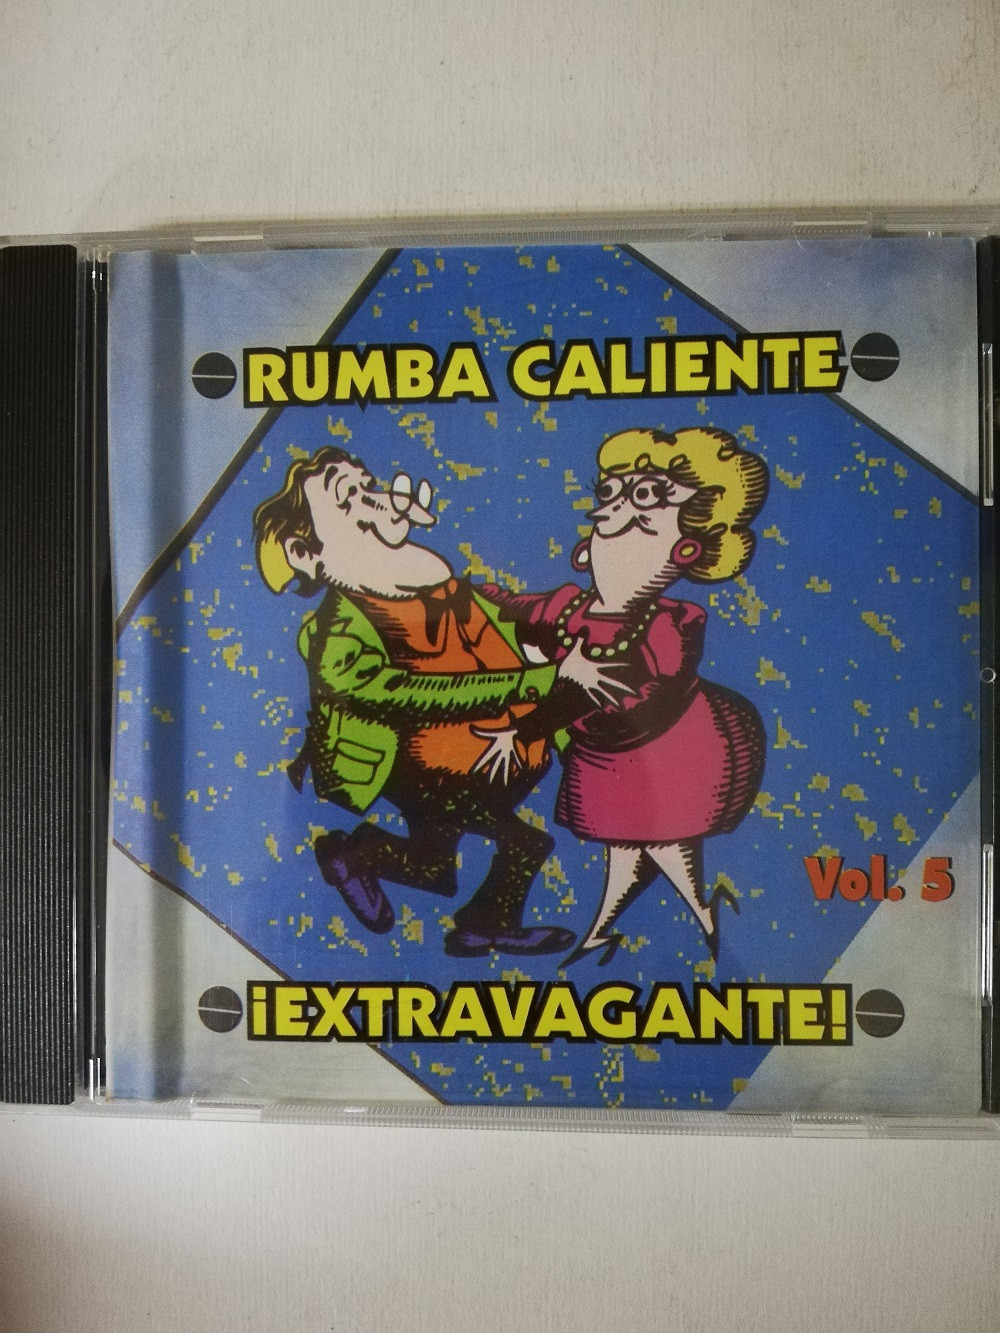 Imagen CD RUMBA CALIENTE - EXTRAVAGANTE! VOL. 5 1